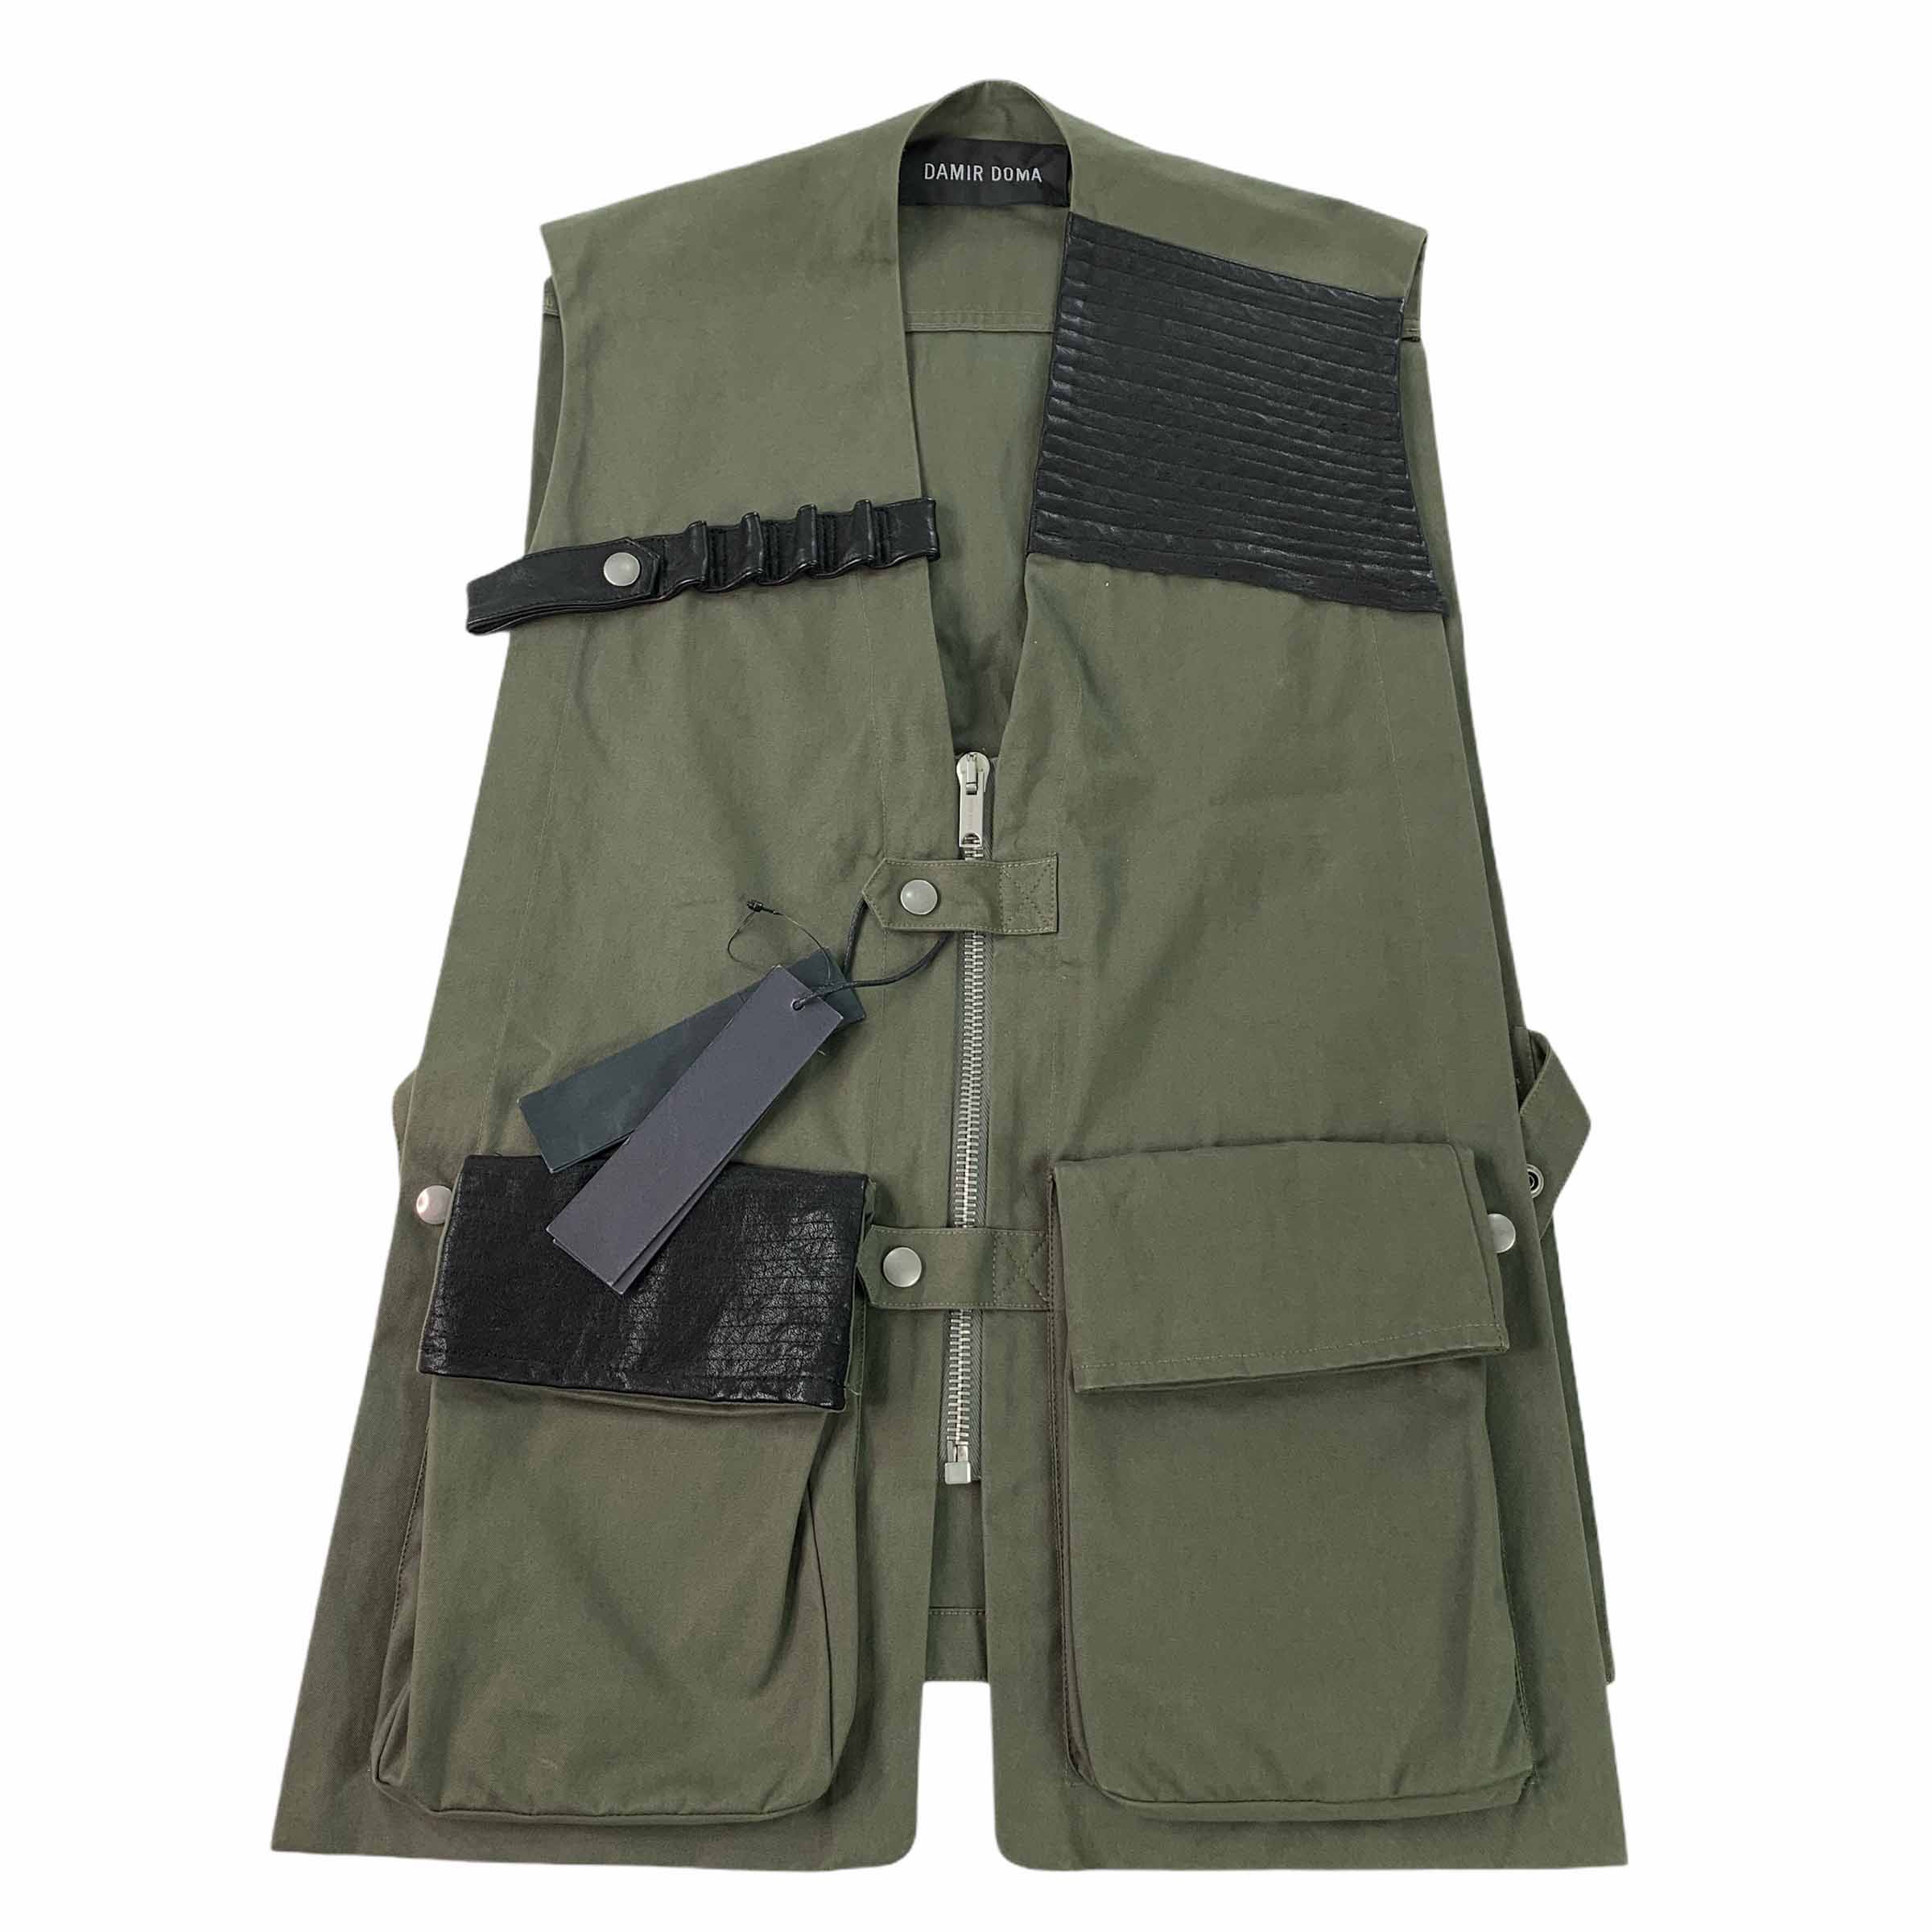 [Damir Doma] Military Vest - Size 44